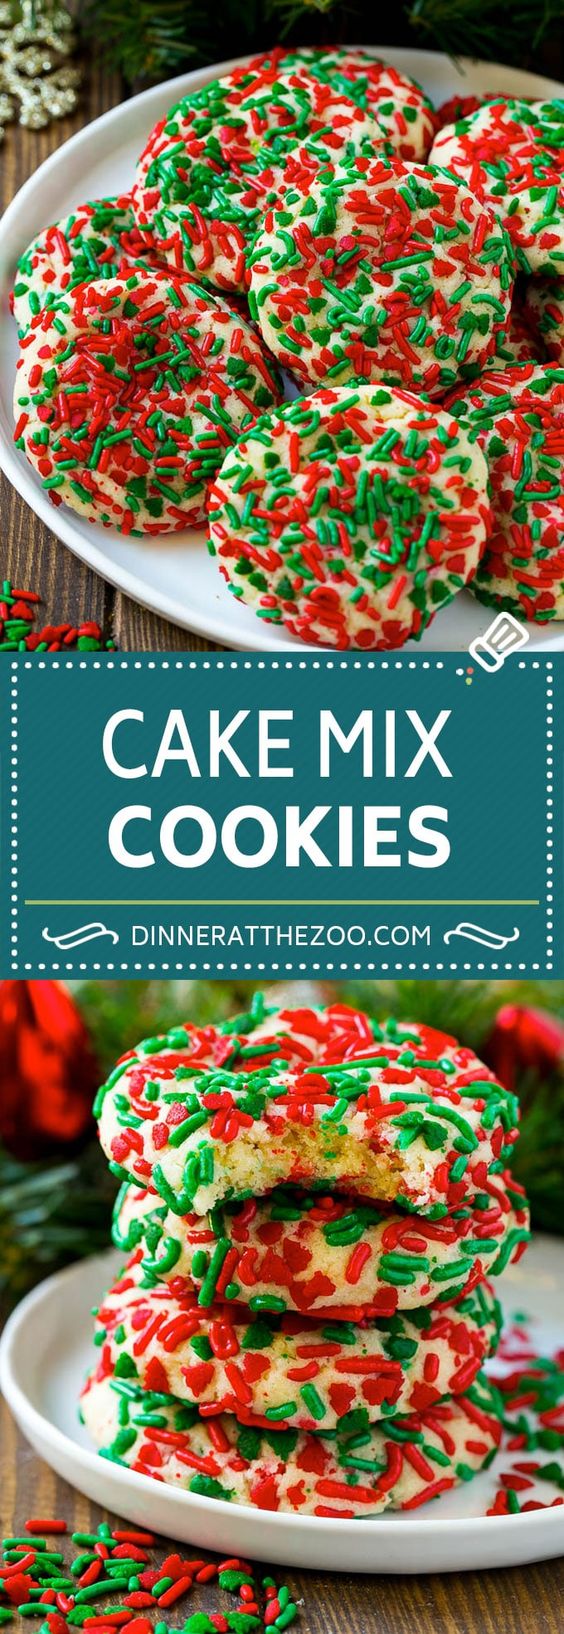 cake mix cookies